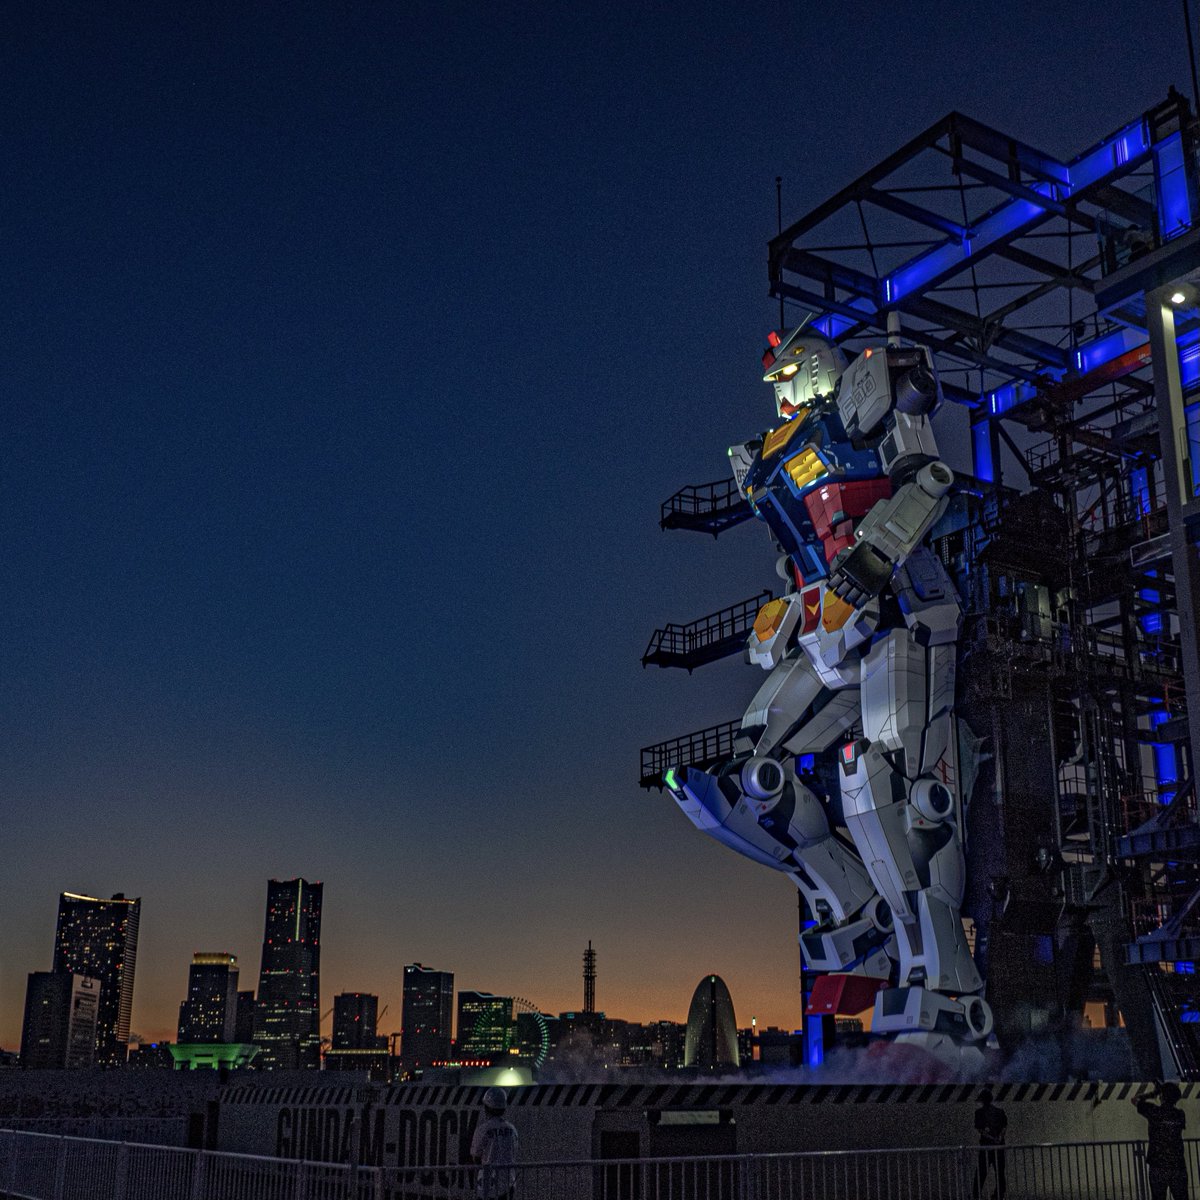 GUNDAM FACTORY YOKOHAMA
The night view of Yokohama complements it.
#GFY #横浜 #ガンダム #実物大ガンダム